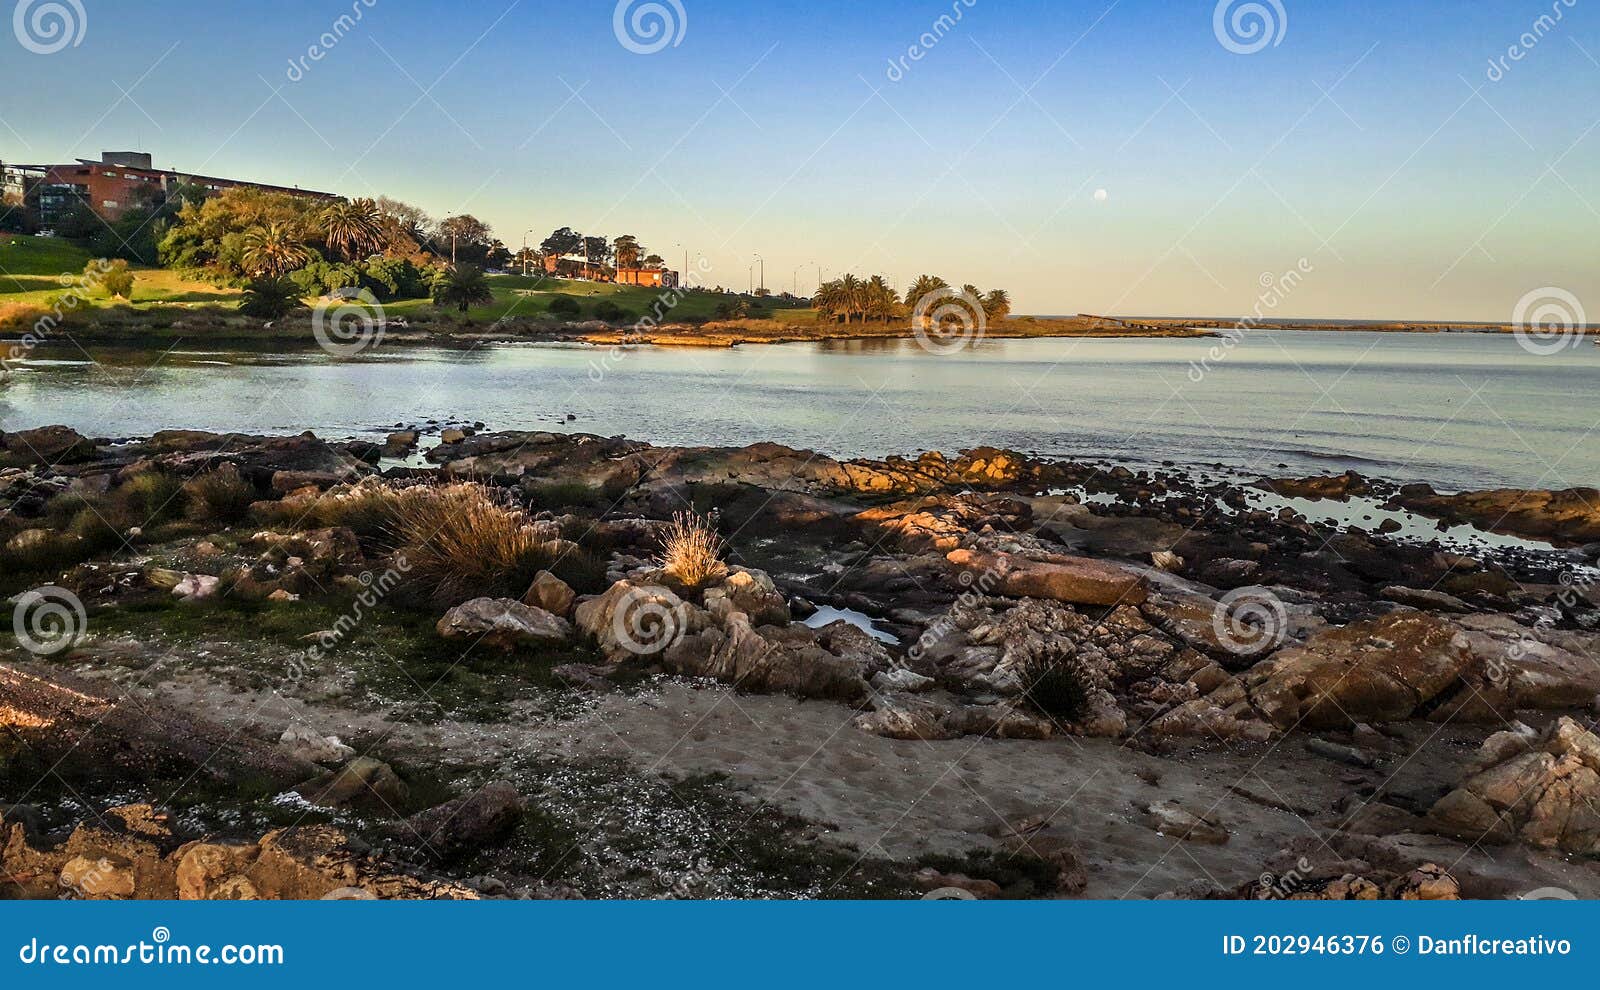 coastal scene buceo beach, montevideo uruguay